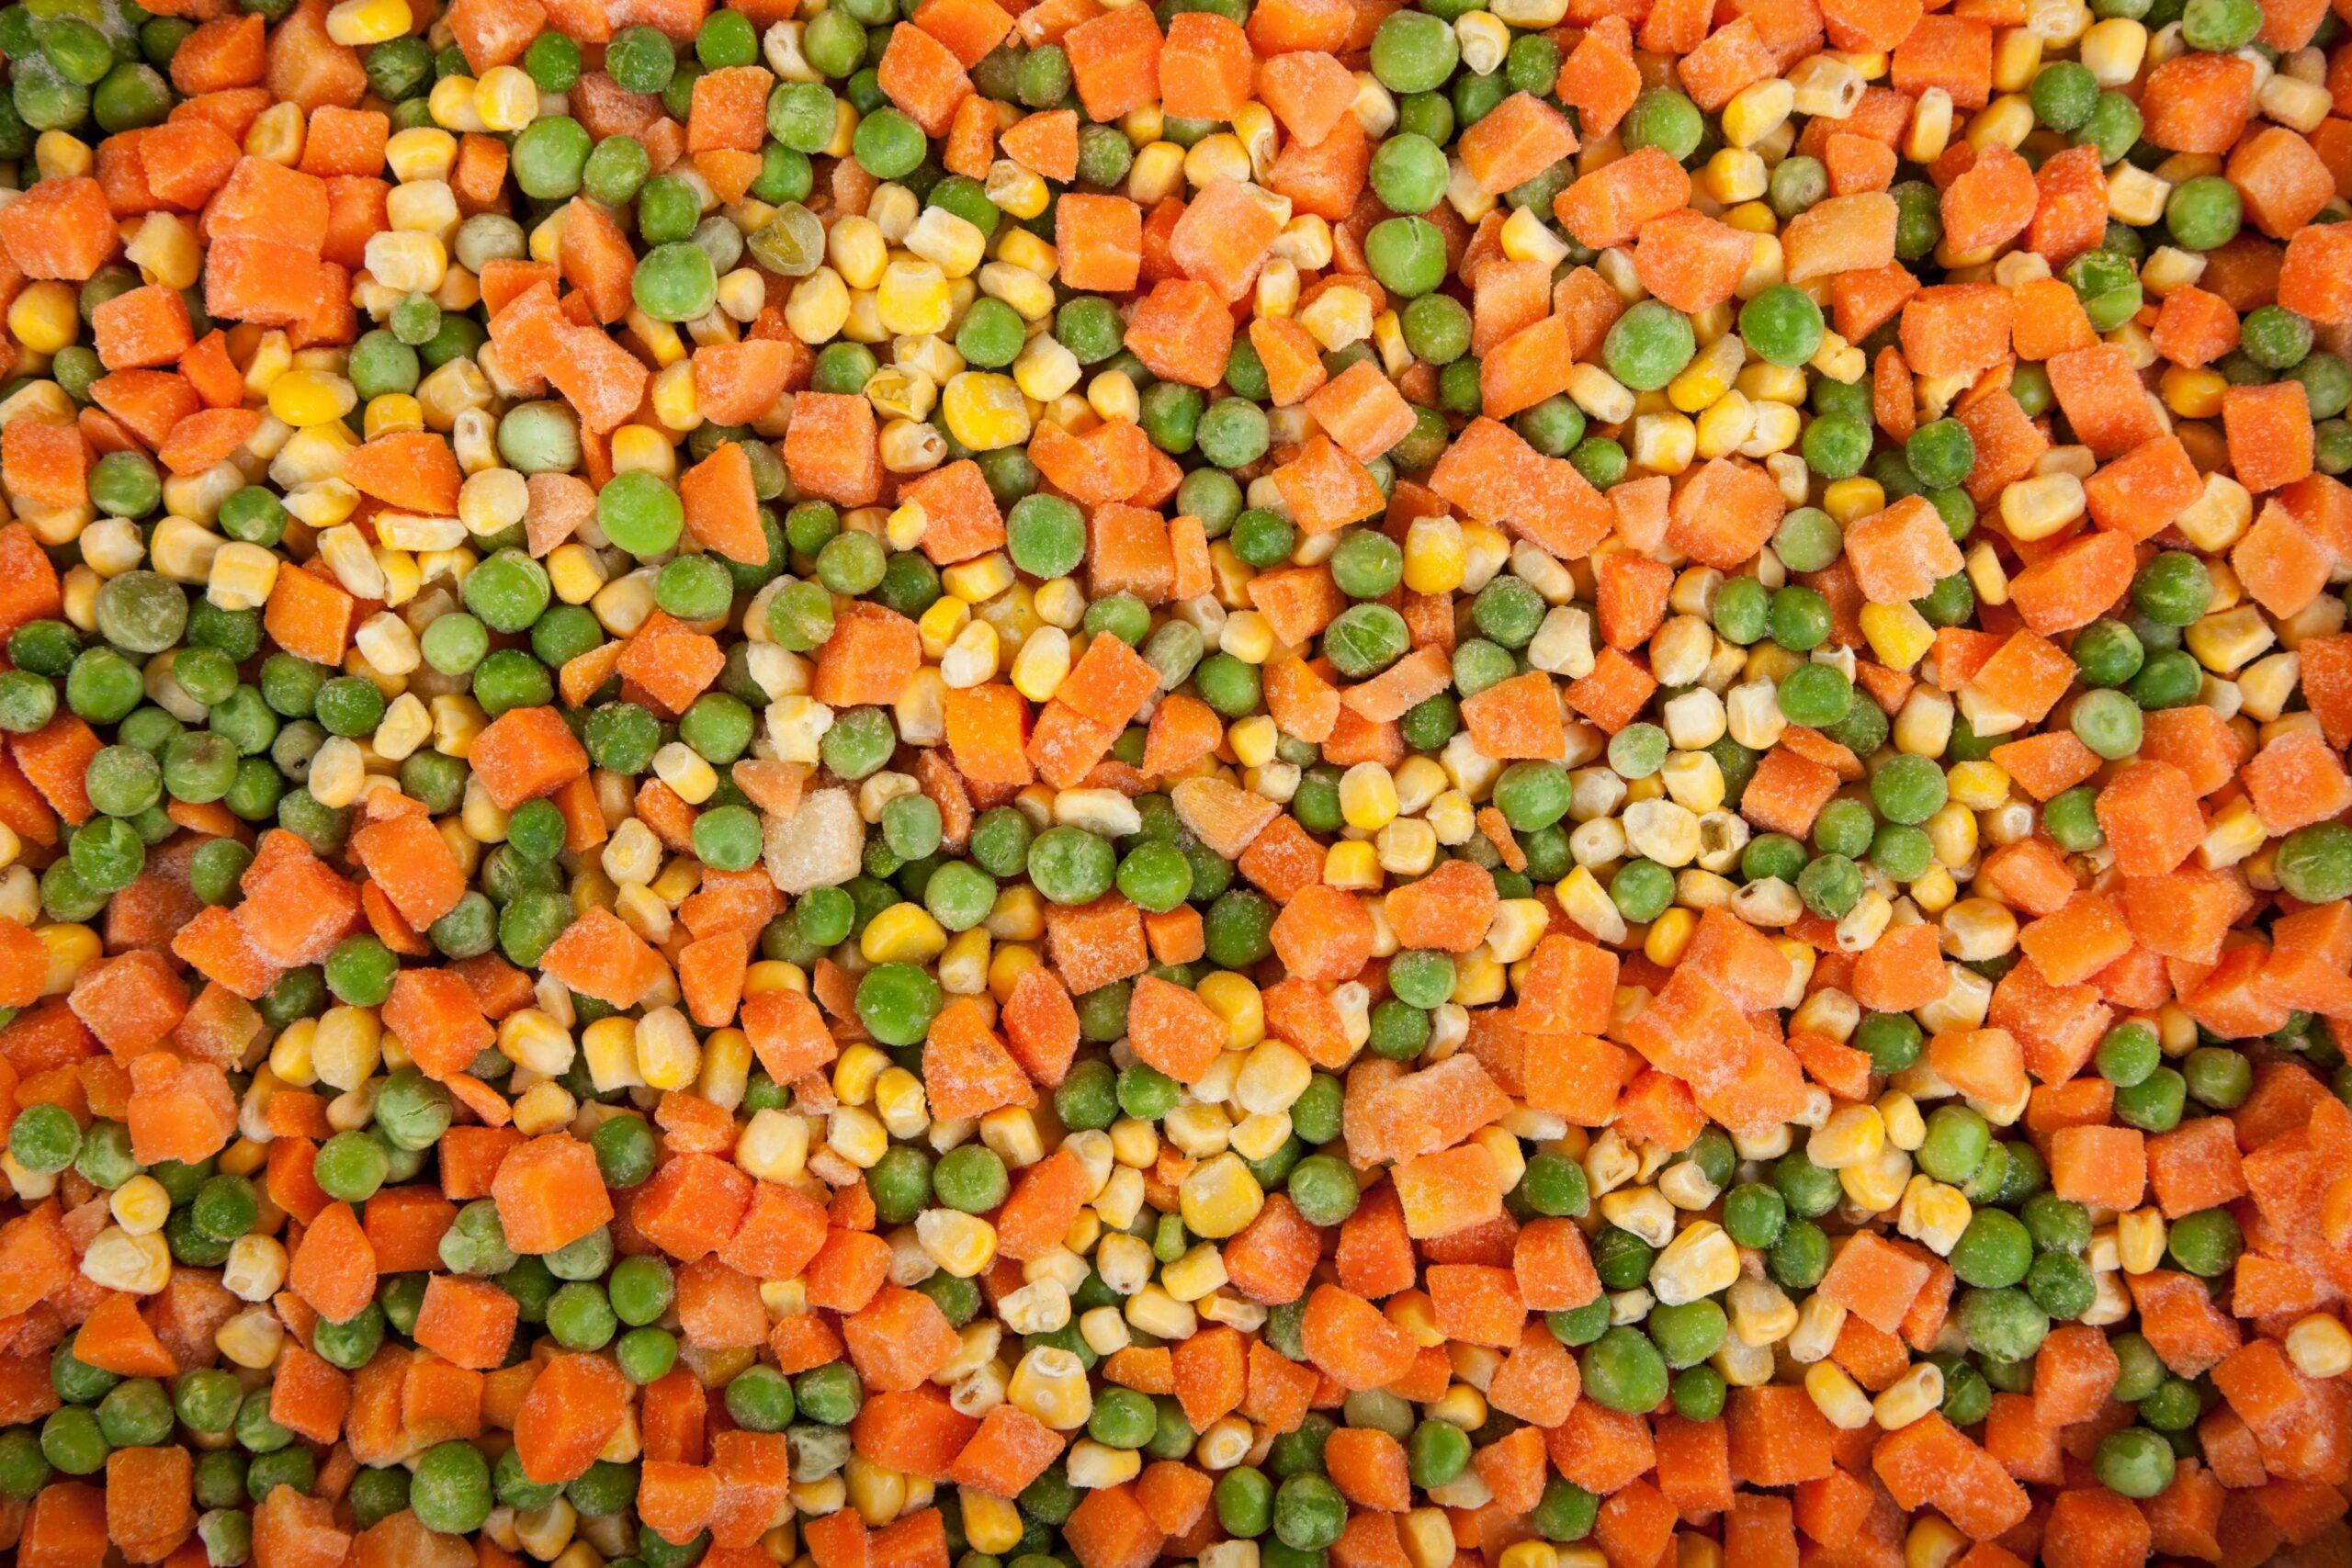 Frozen peas, carrots, and corn